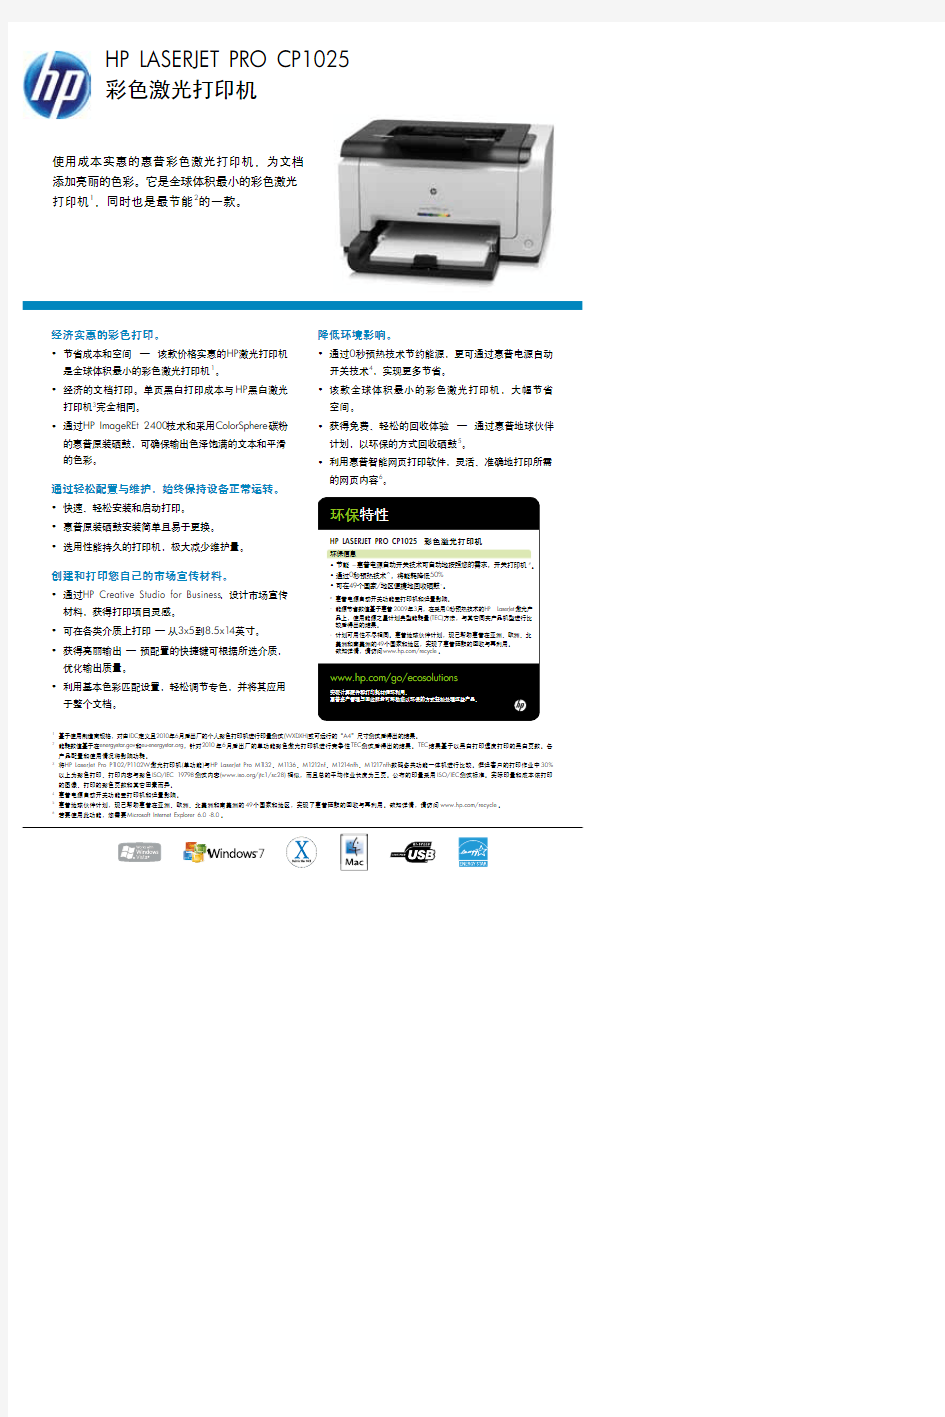 HP LASERJET PRO CP 1025 彩色激光打印机用户手册